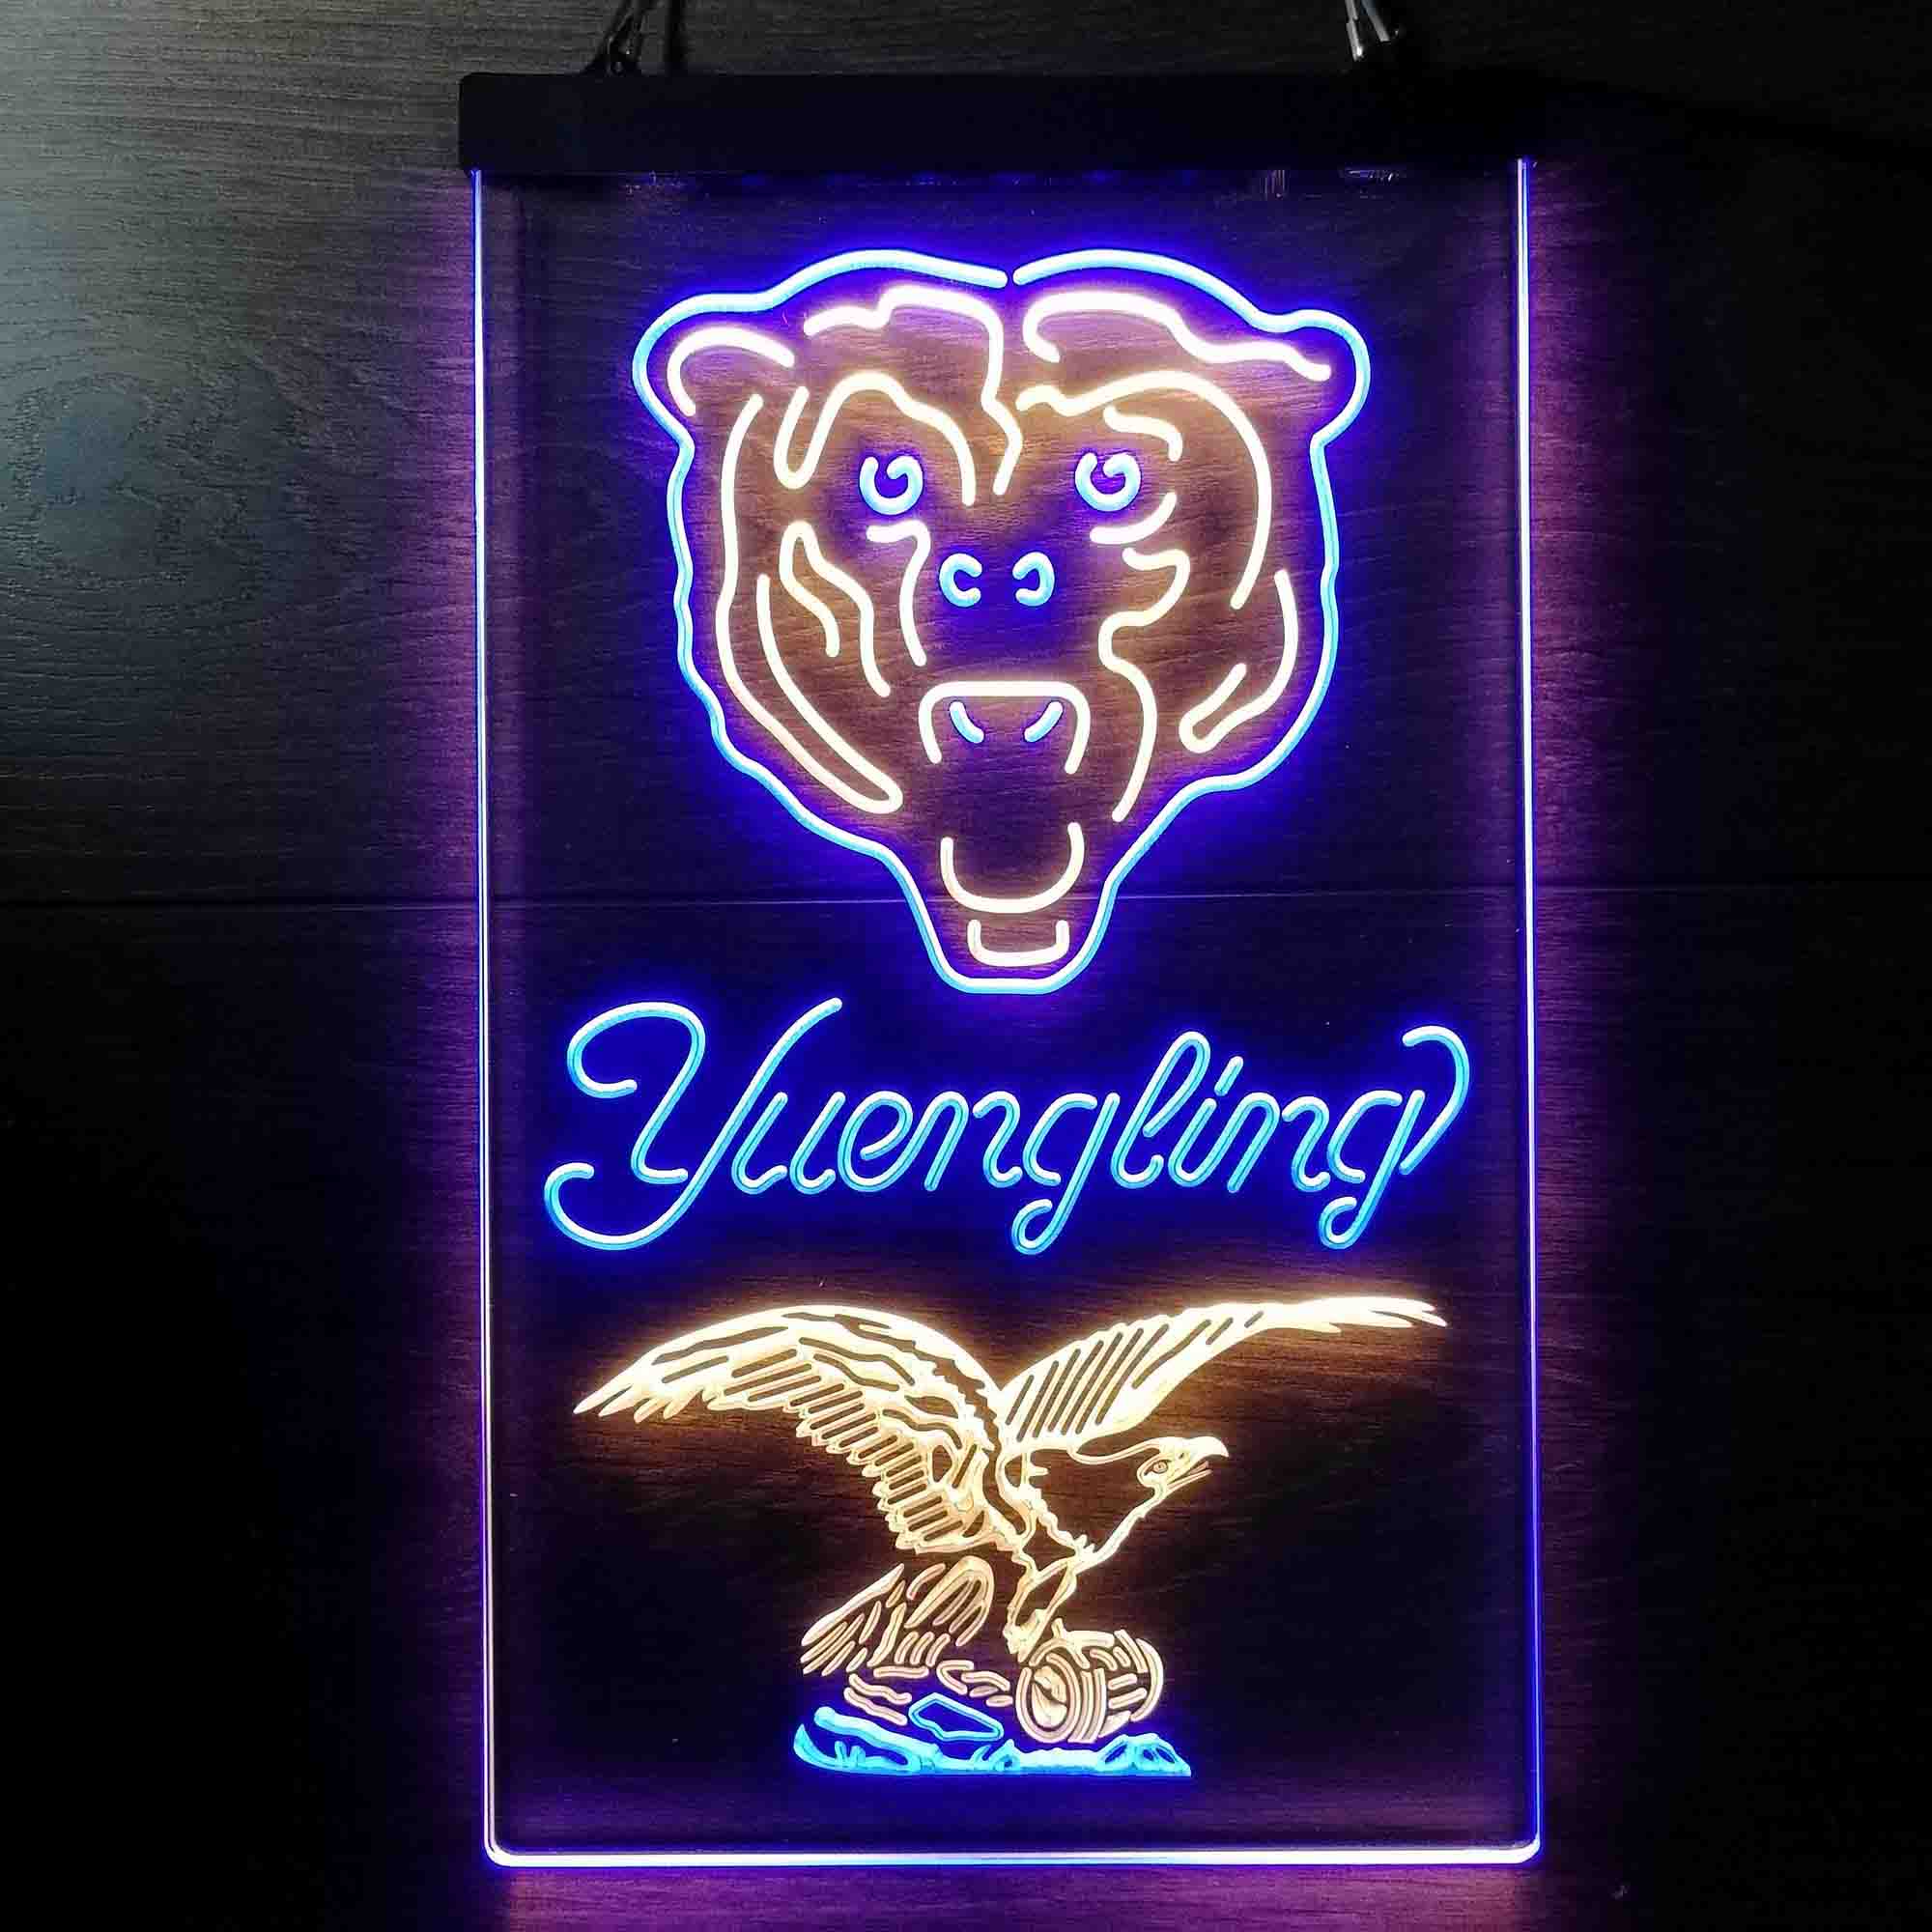 Yuengling Bar Chicago Bears Est. 1920 Neon-Like LED Sign